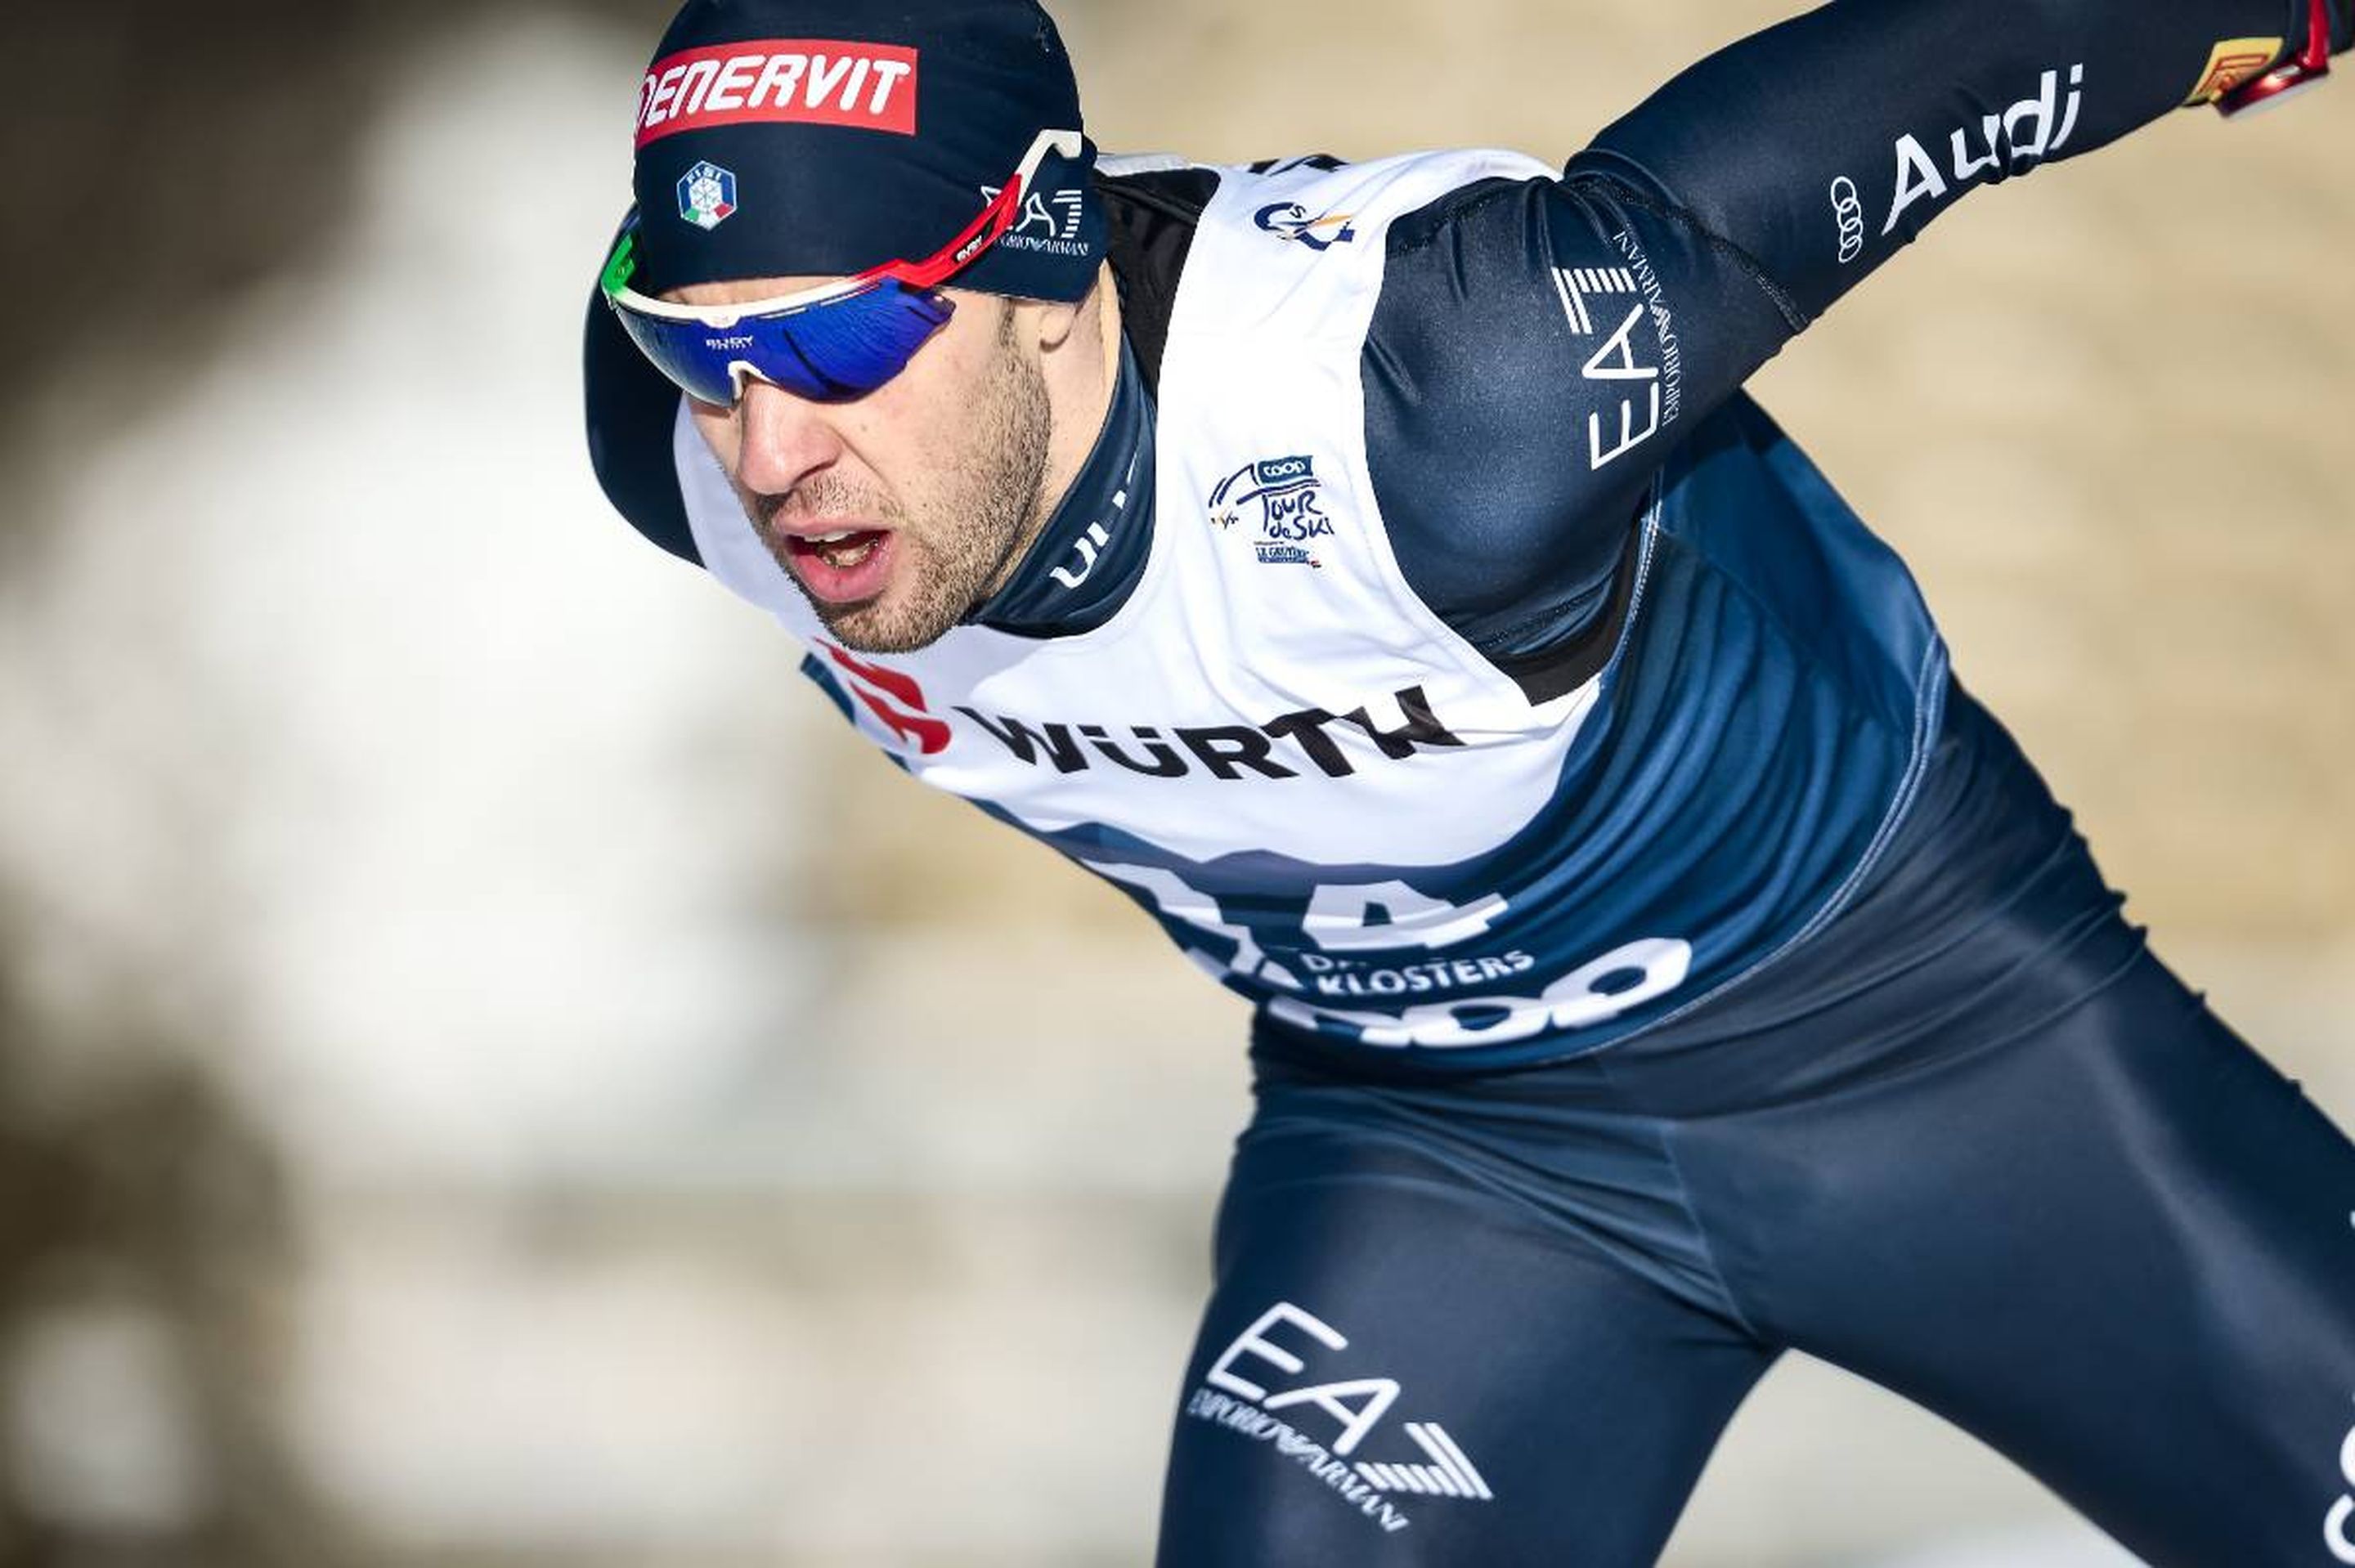 Federico Pellegrino (ITA) sprints into Tour de Ski contention @ Nordic Focus